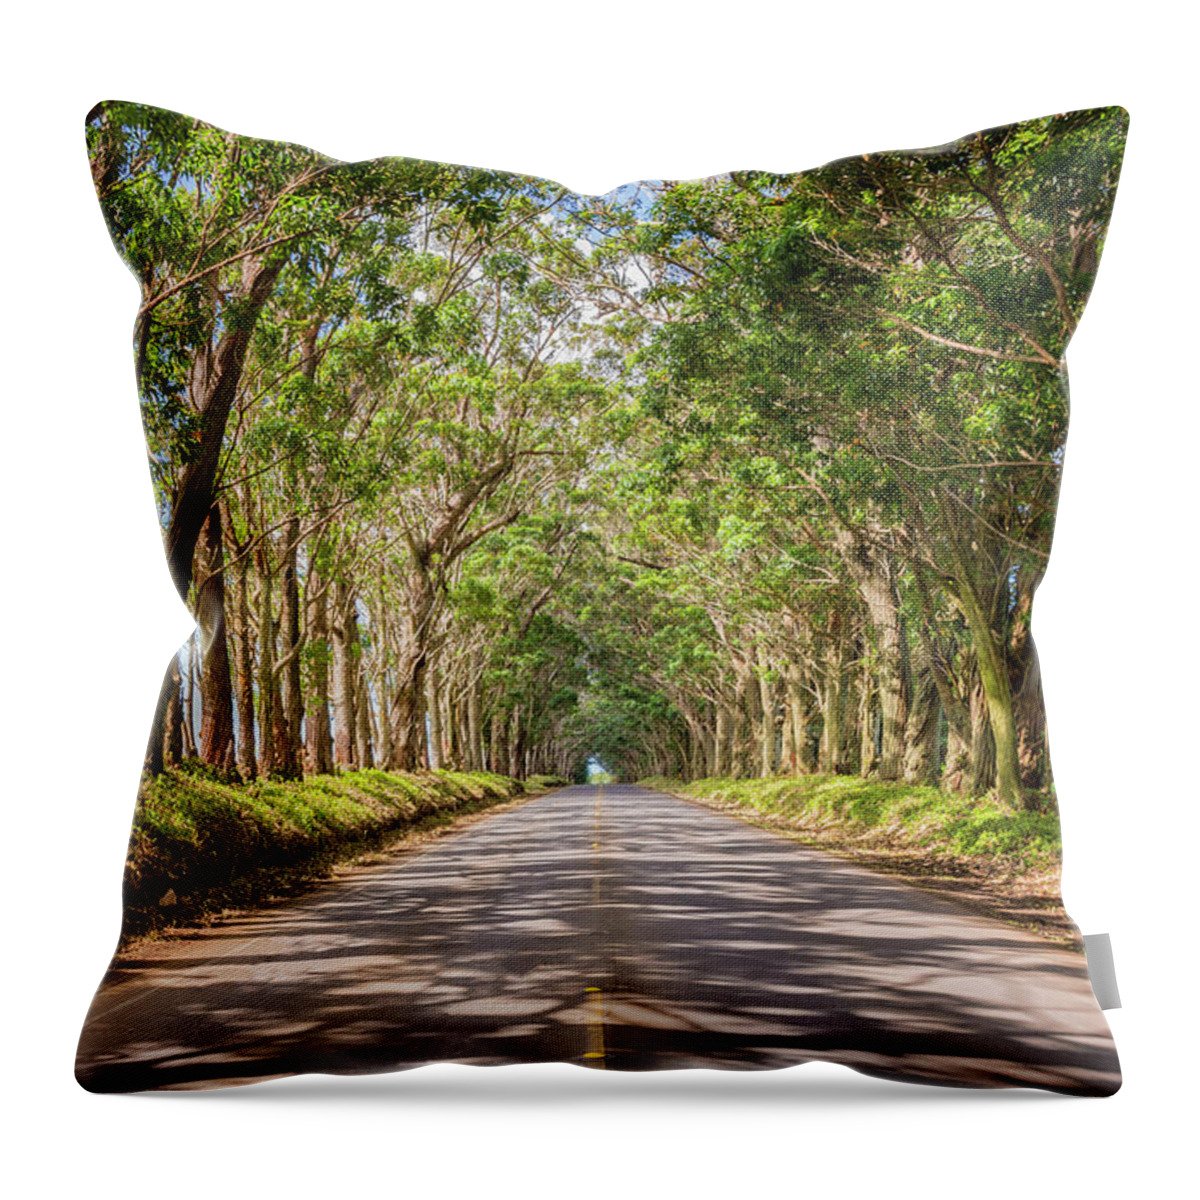 Tree Tunnel Kauai Hawaii Throw Pillow featuring the photograph Eucalyptus Tree Tunnel - Kauai Hawaii by Brian Harig